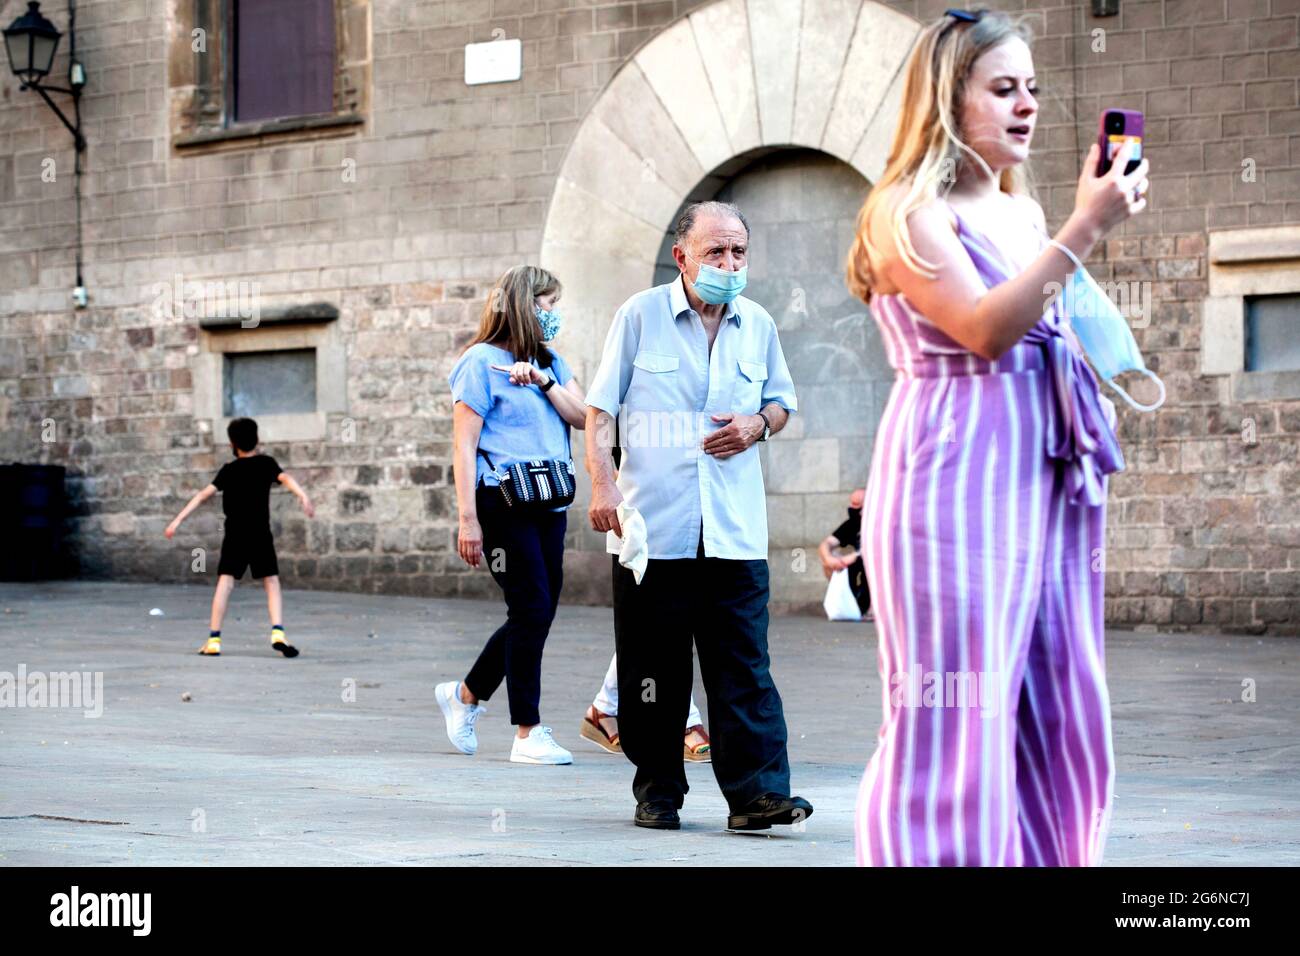 Local man walking past tourists, Barcelona, Spain. Stock Photo